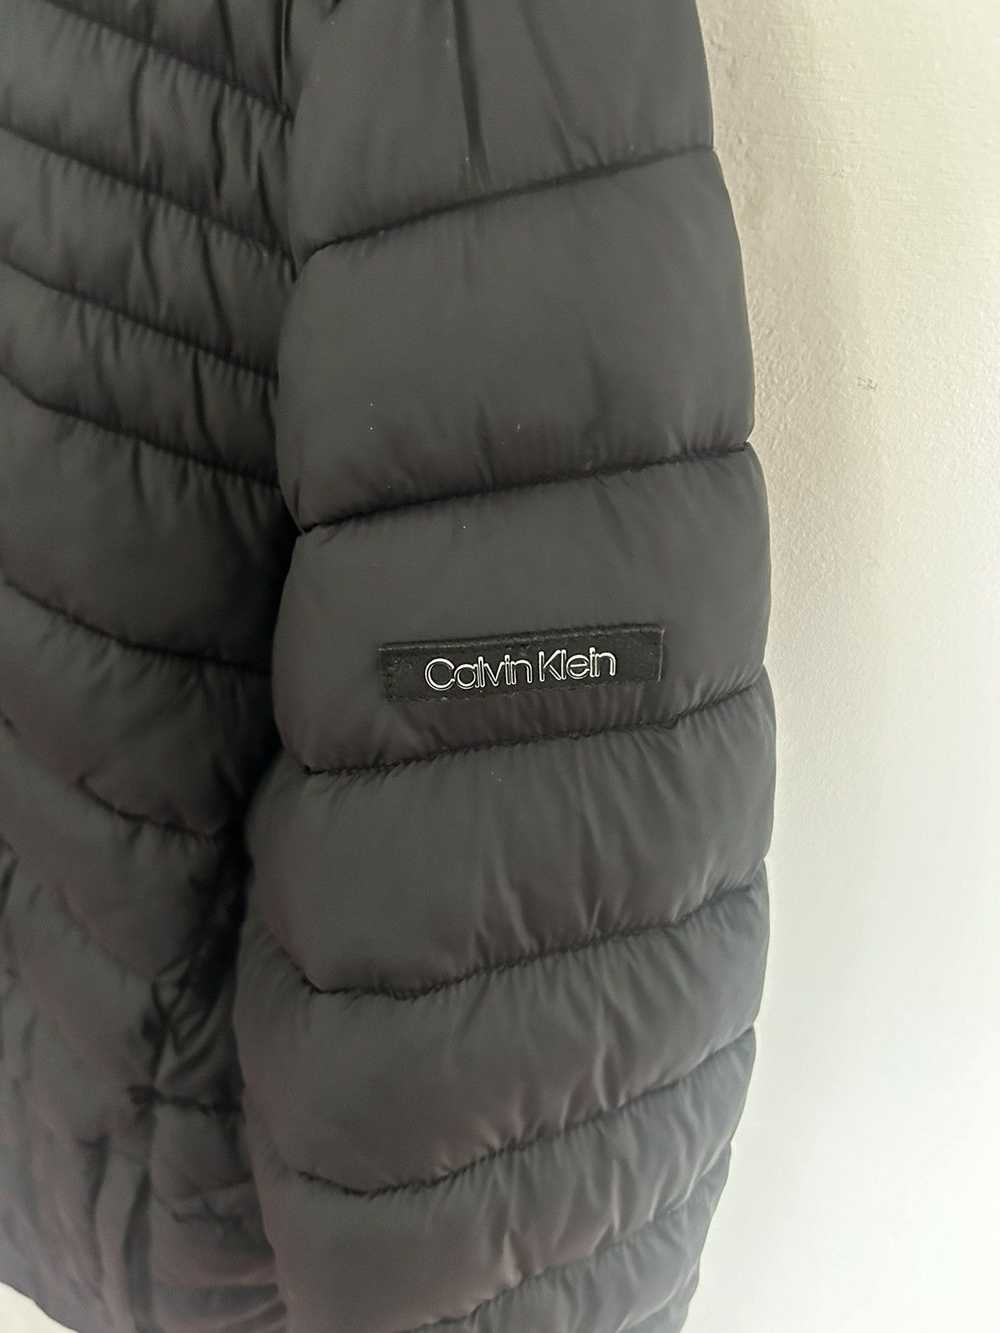 Calvin Klein Black Jacket - image 5